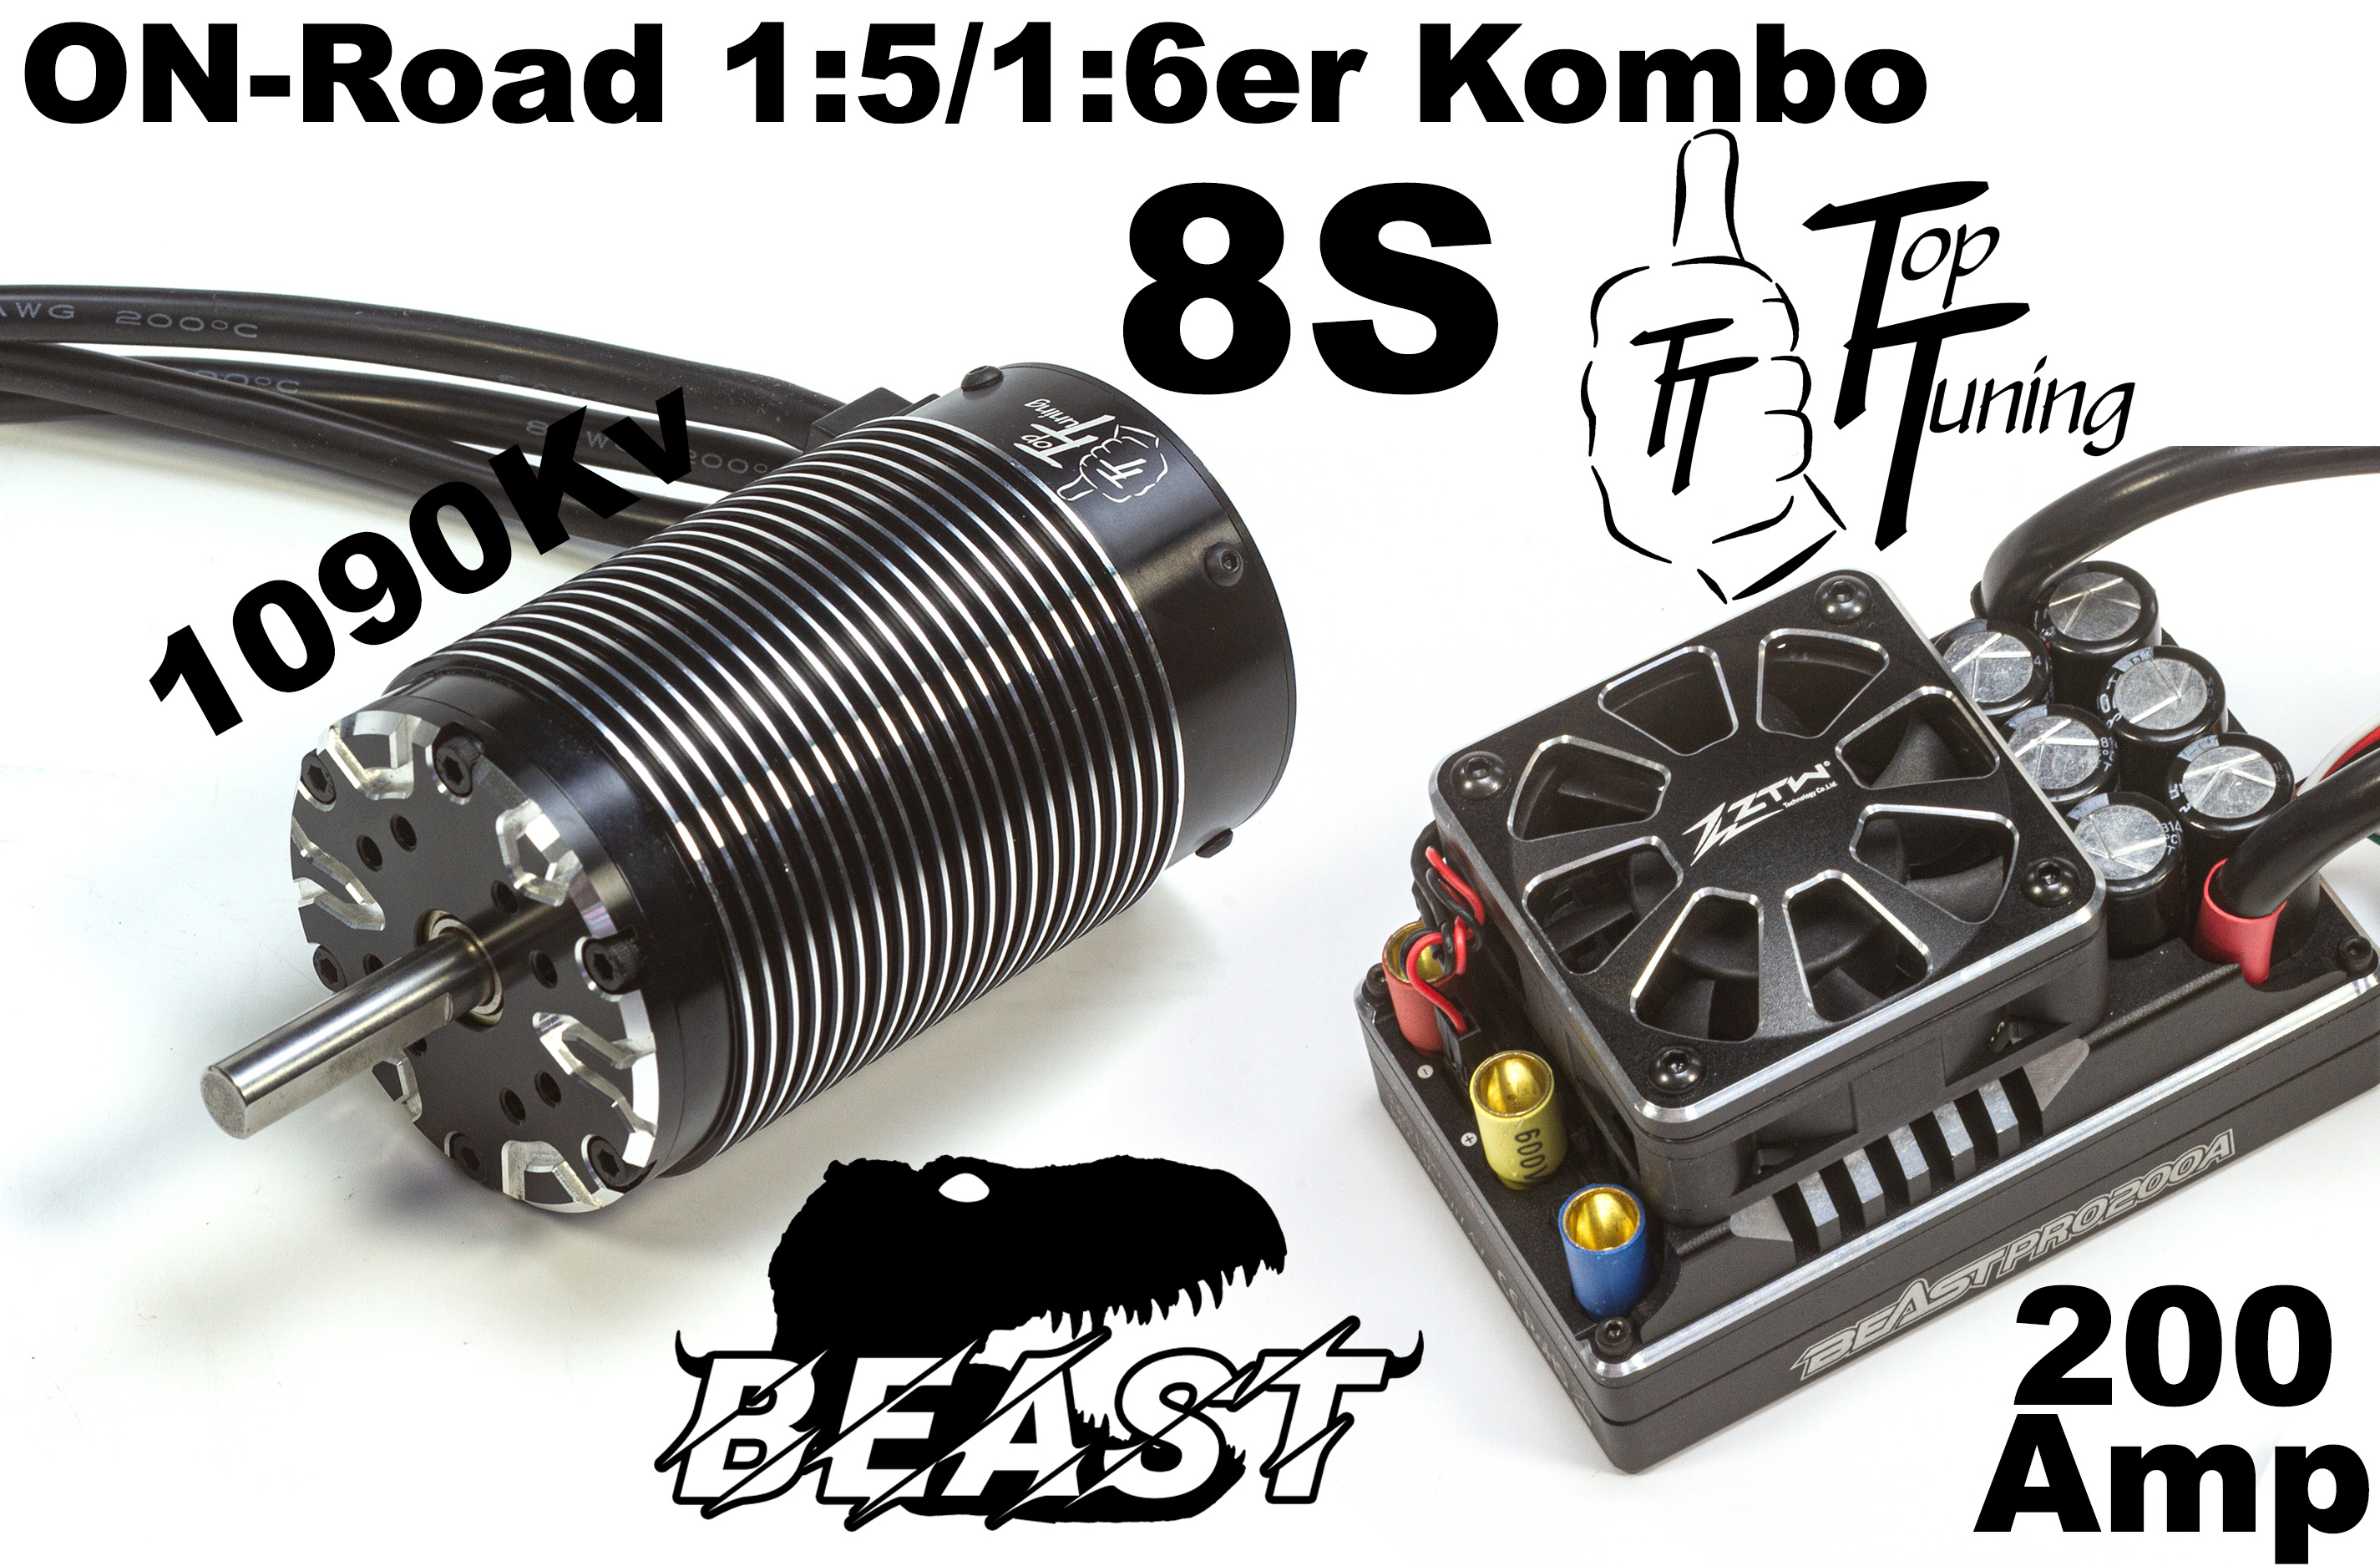 y1532/03 ZTW Beast Pro 200A Regler mit 1090KV Brushless Motor